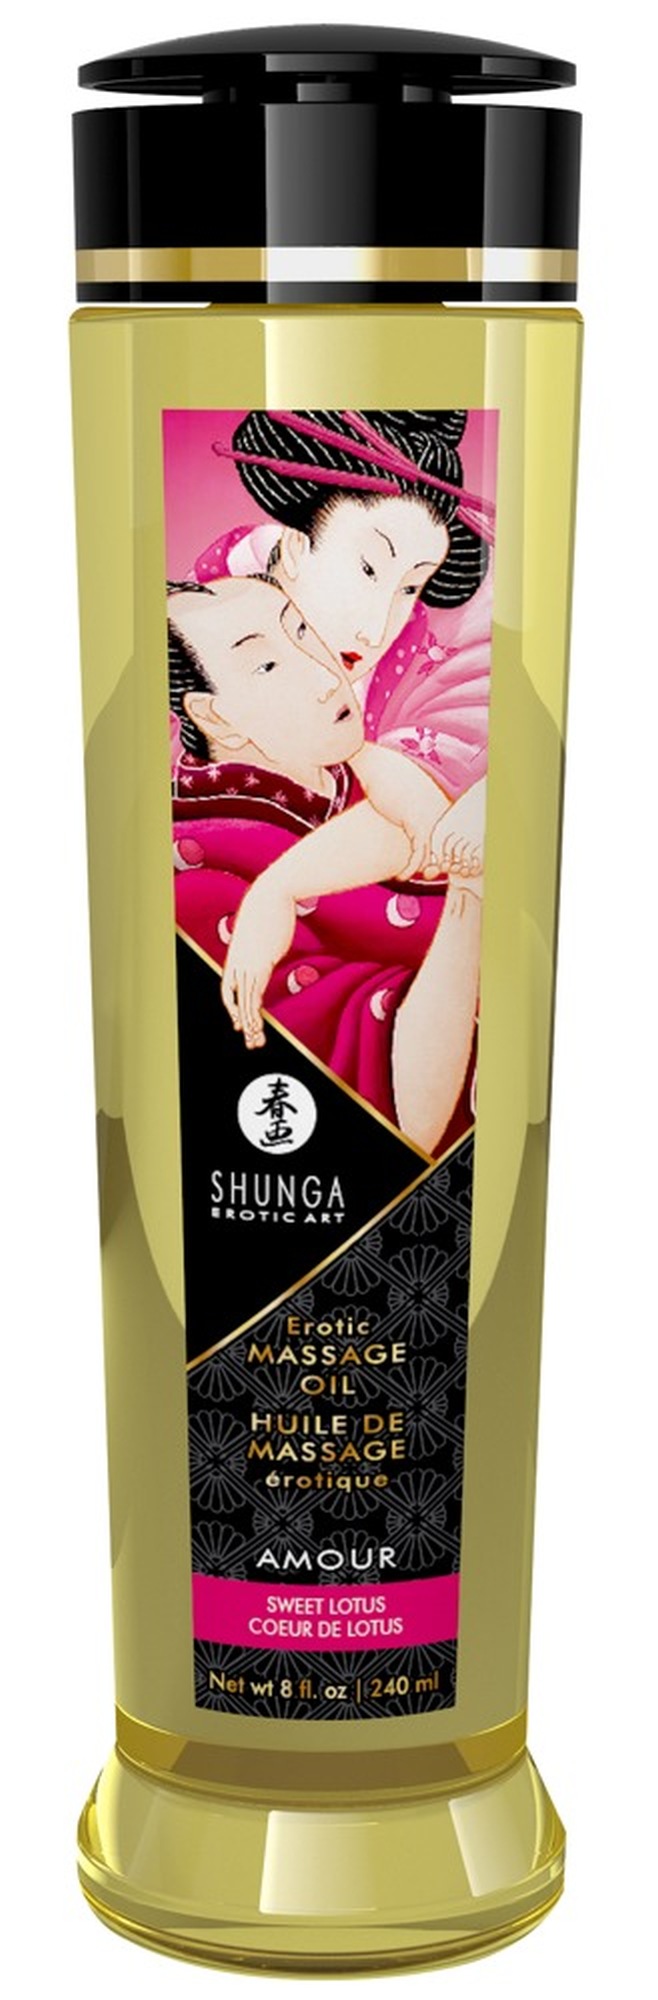 Shunga Massage Oil Amour SWEET LOTUS zrobi nastrój w sypialni